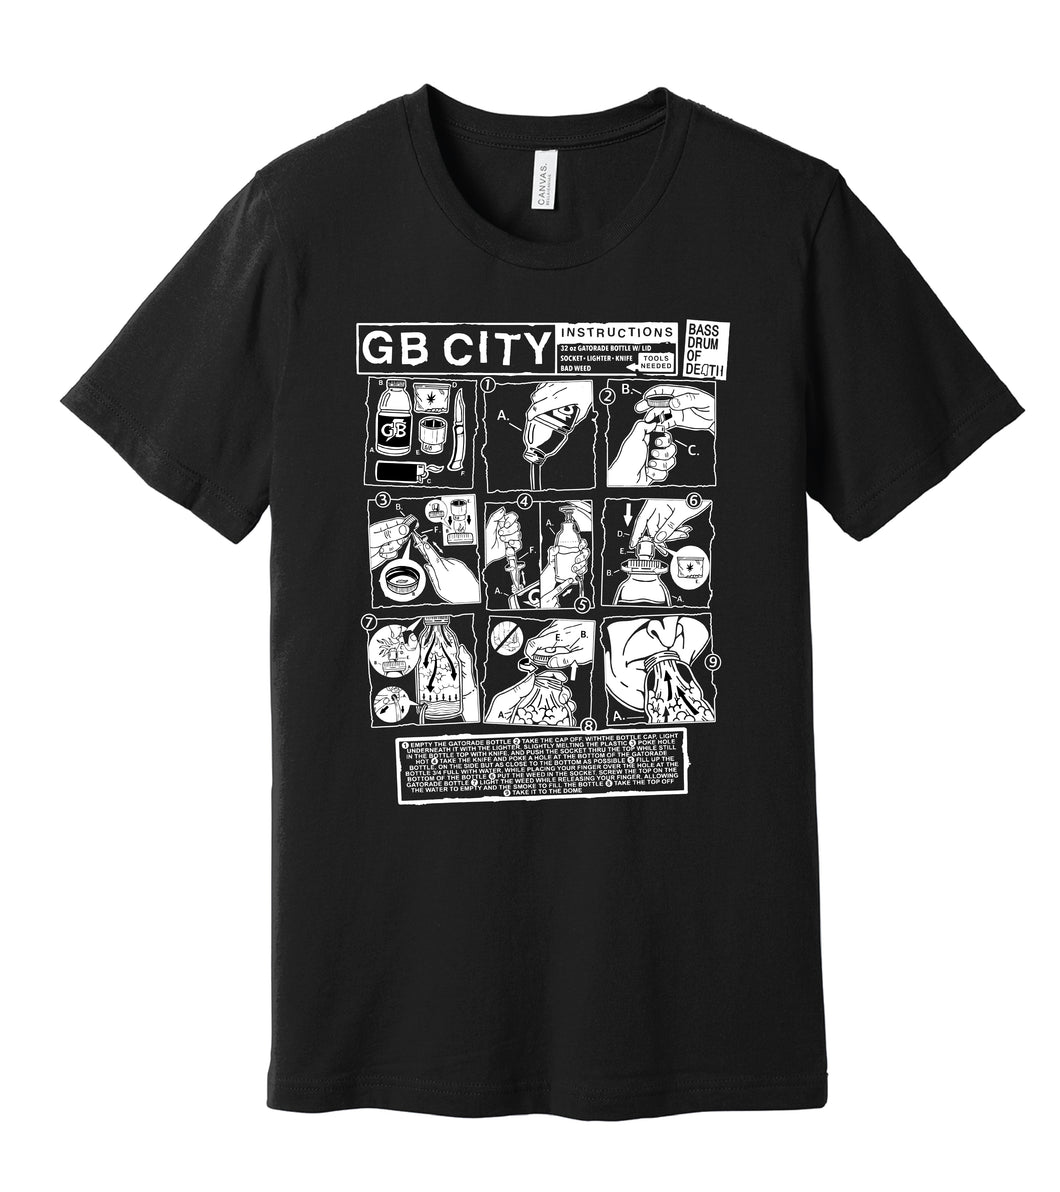 GB City Instructions Tee - Black